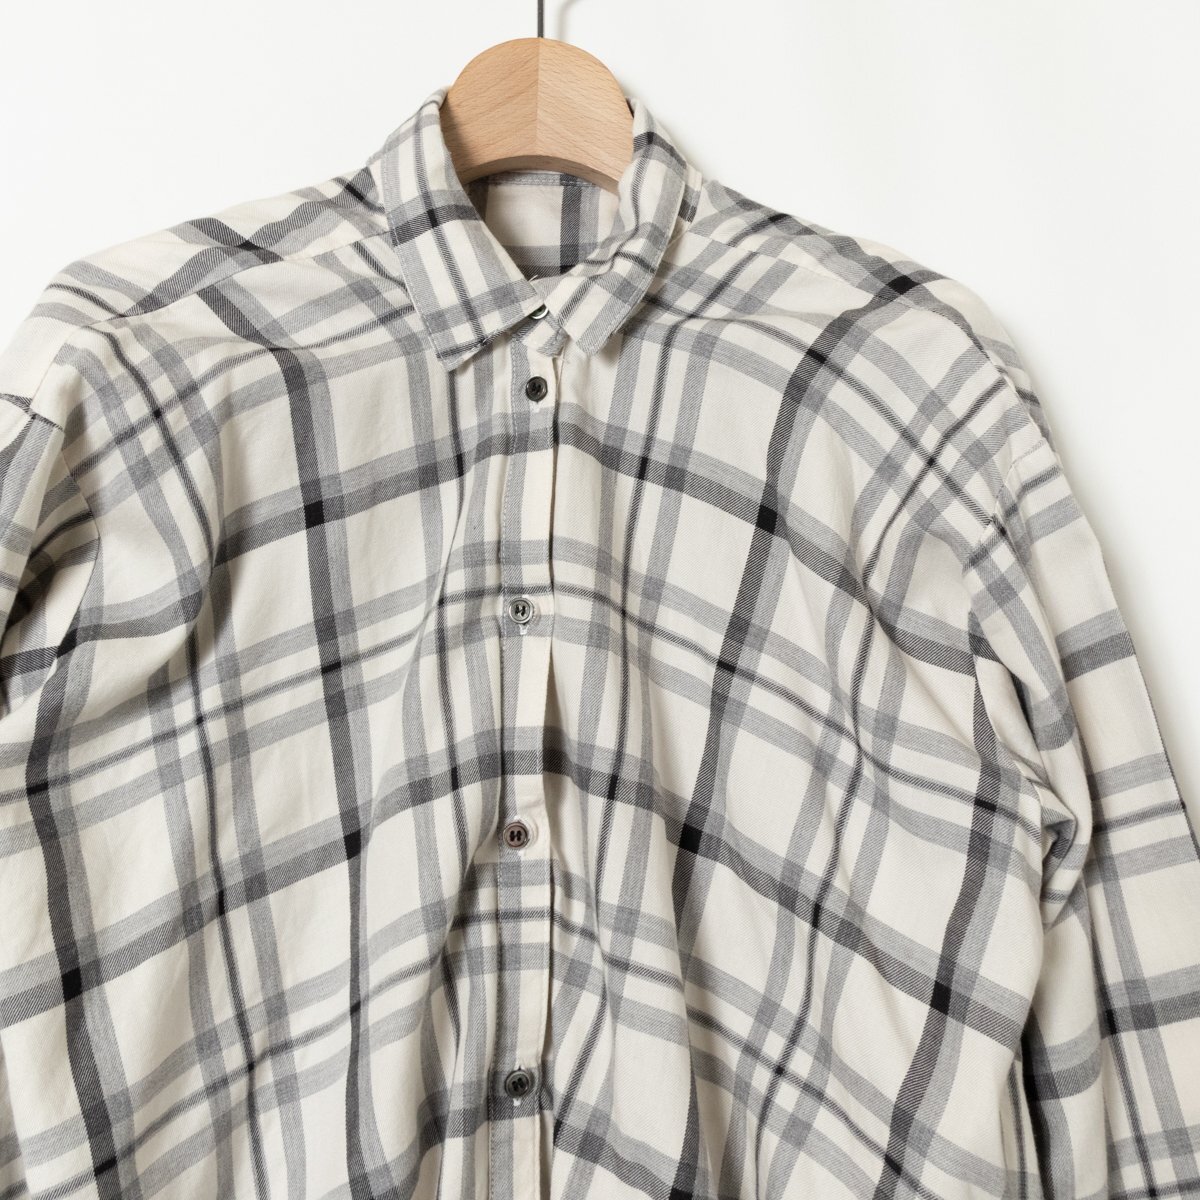 MAYSON GREY Mayson Grey check pattern design shirt long sleeve total pattern tops 2 rayon gray white beautiful . casual 